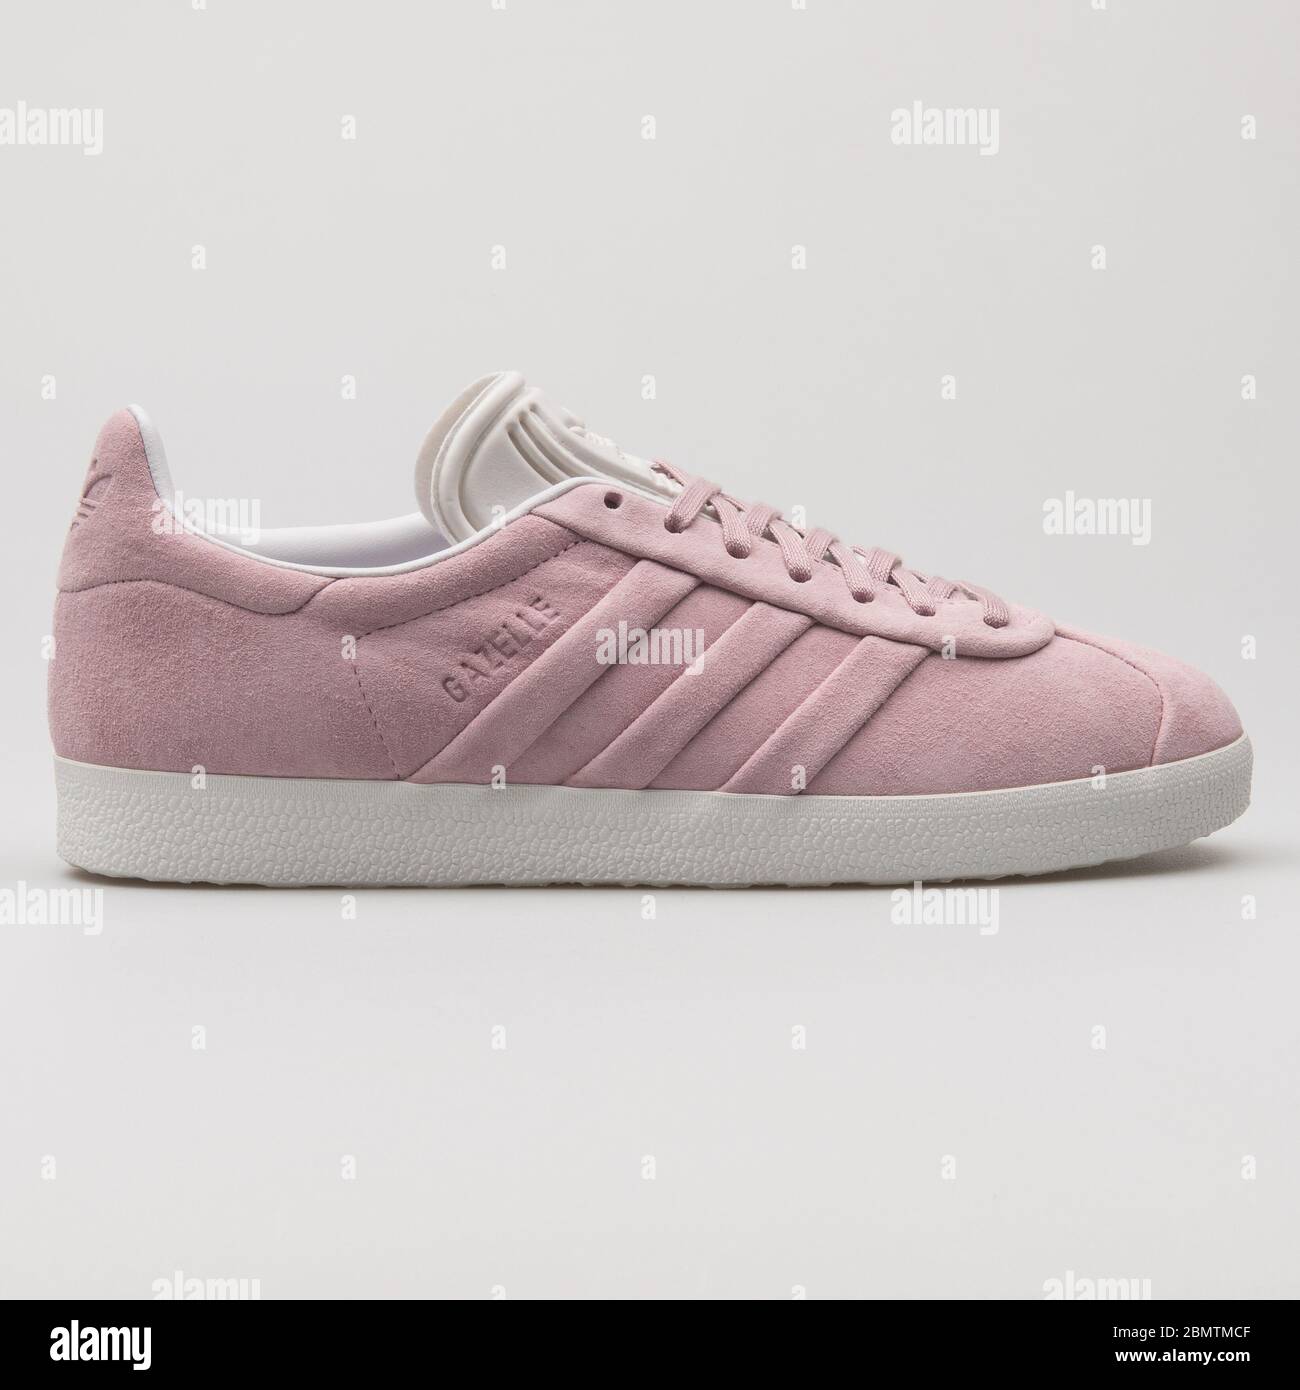 VIENNA, AUSTRIA - FEBRUARY 19, 2018: Adidas Gazelle Stitch And Turn pink  and white sneaker on white background Stock Photo - Alamy